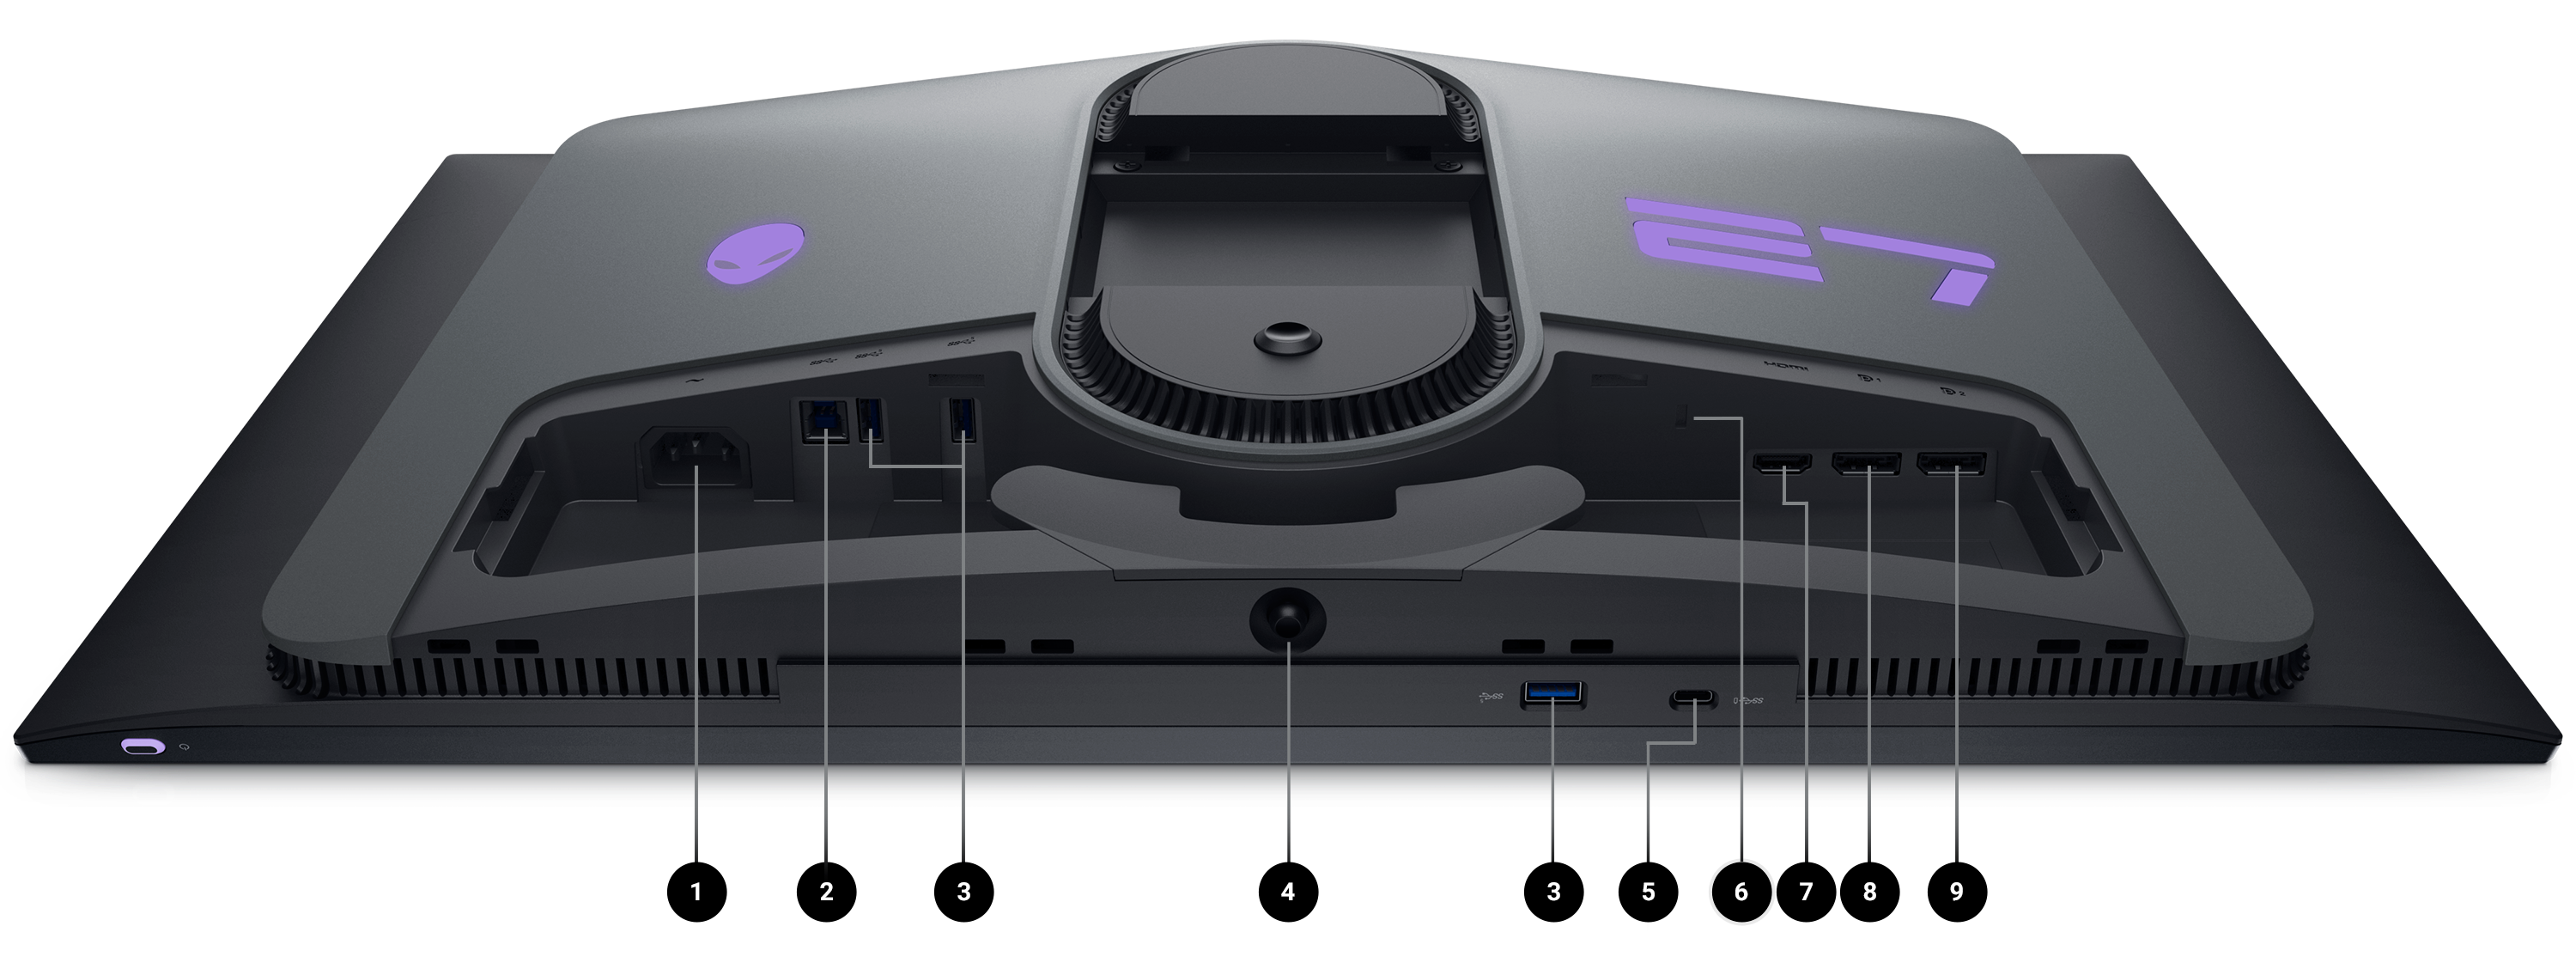 Dell AW2725DF 遊戲專用顯示器，螢幕朝下，以數字 1 到 9 顯示產品的連接介面選項。